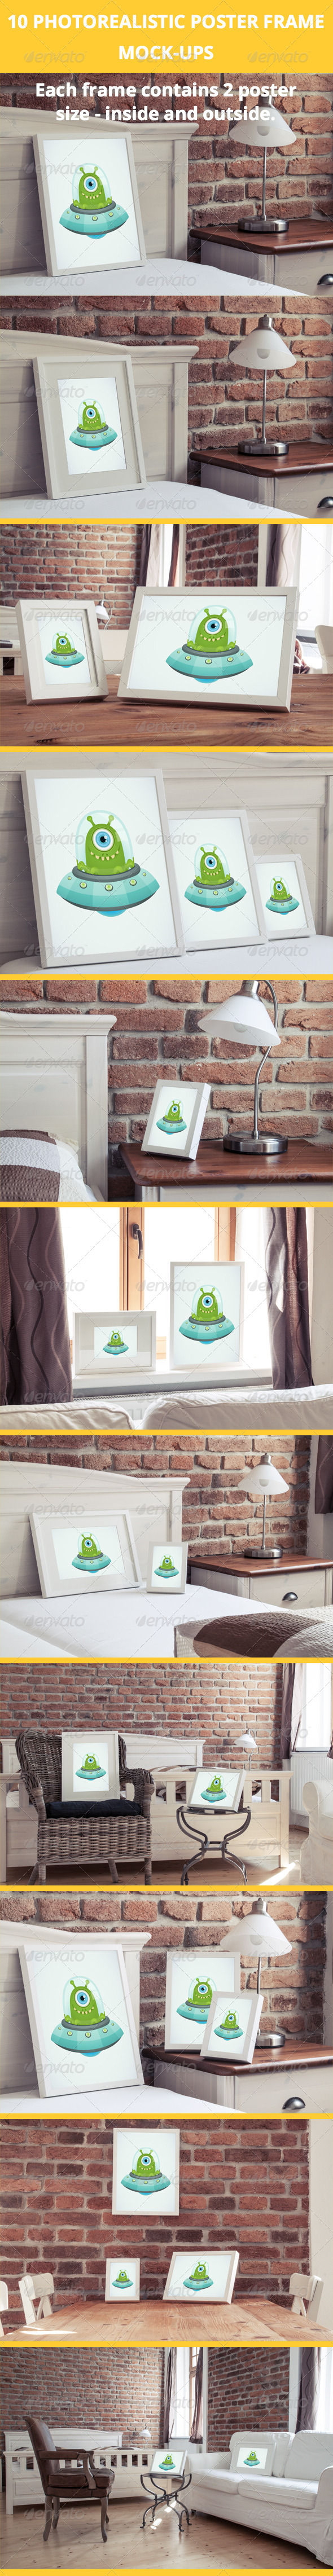 Download 10 Poster Frame Mock-Ups in luxury interior by maroskadlec | GraphicRiver